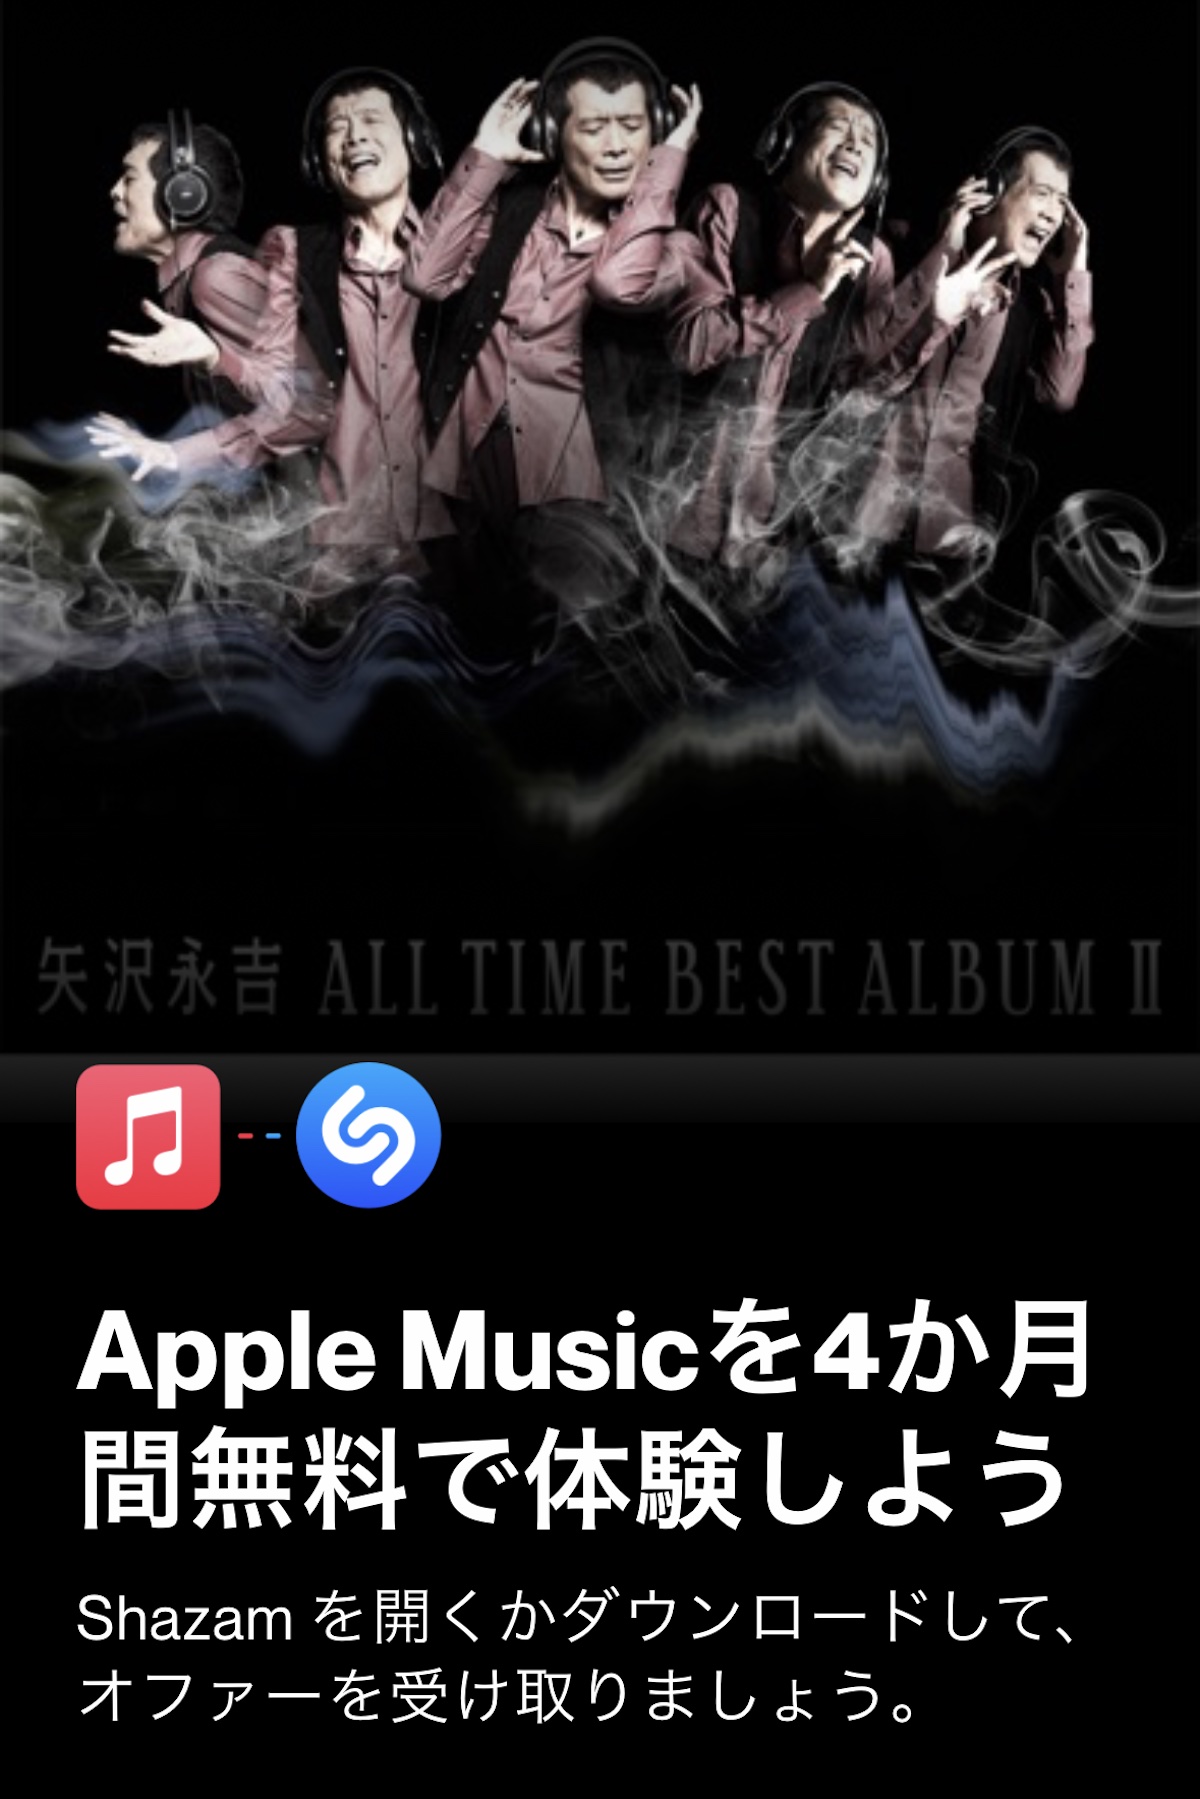 矢沢永吉 Apple Music